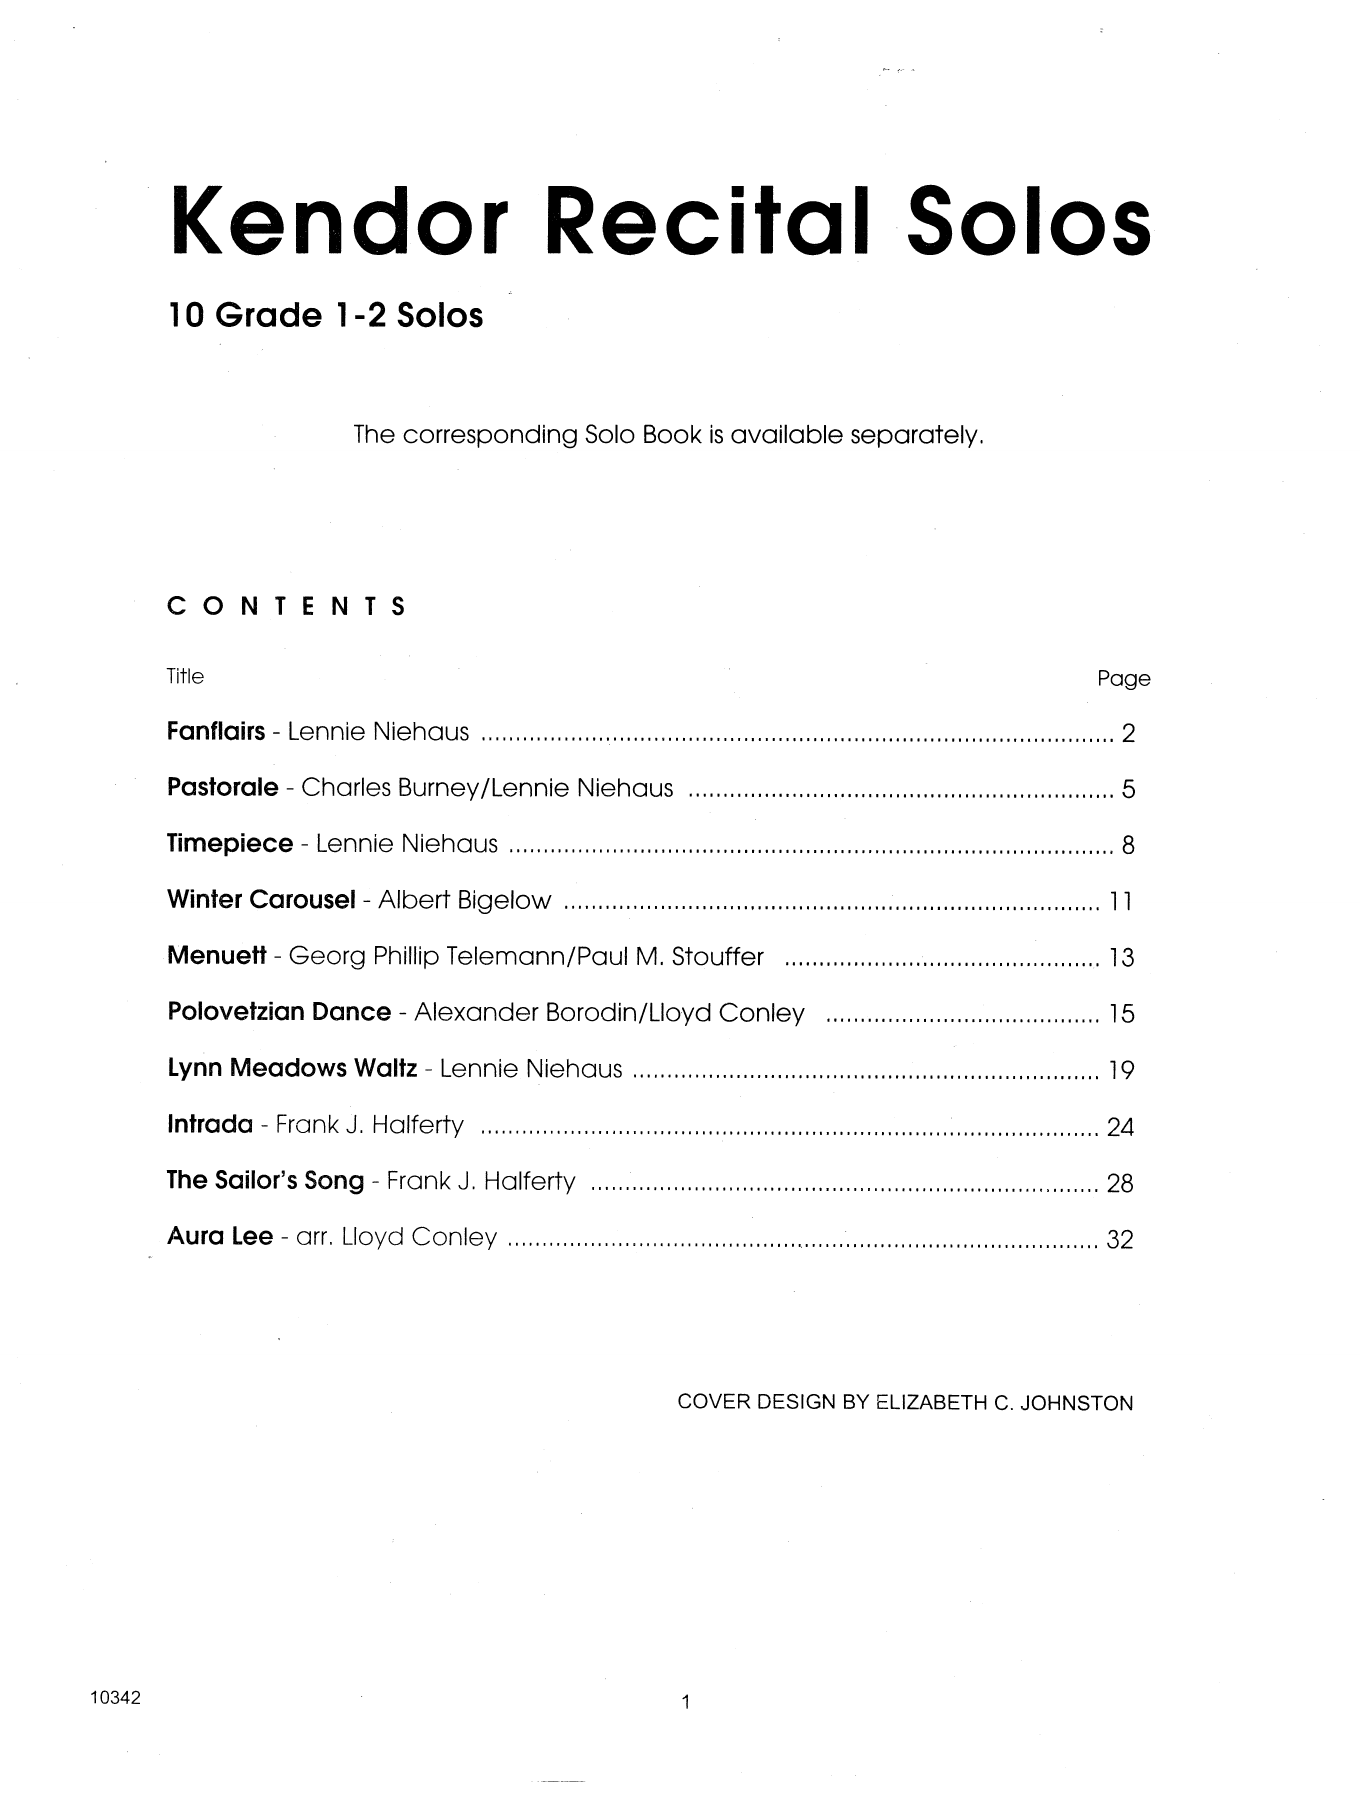 Download Various Kendor Recital Solos - Horn in F - Pian Sheet Music